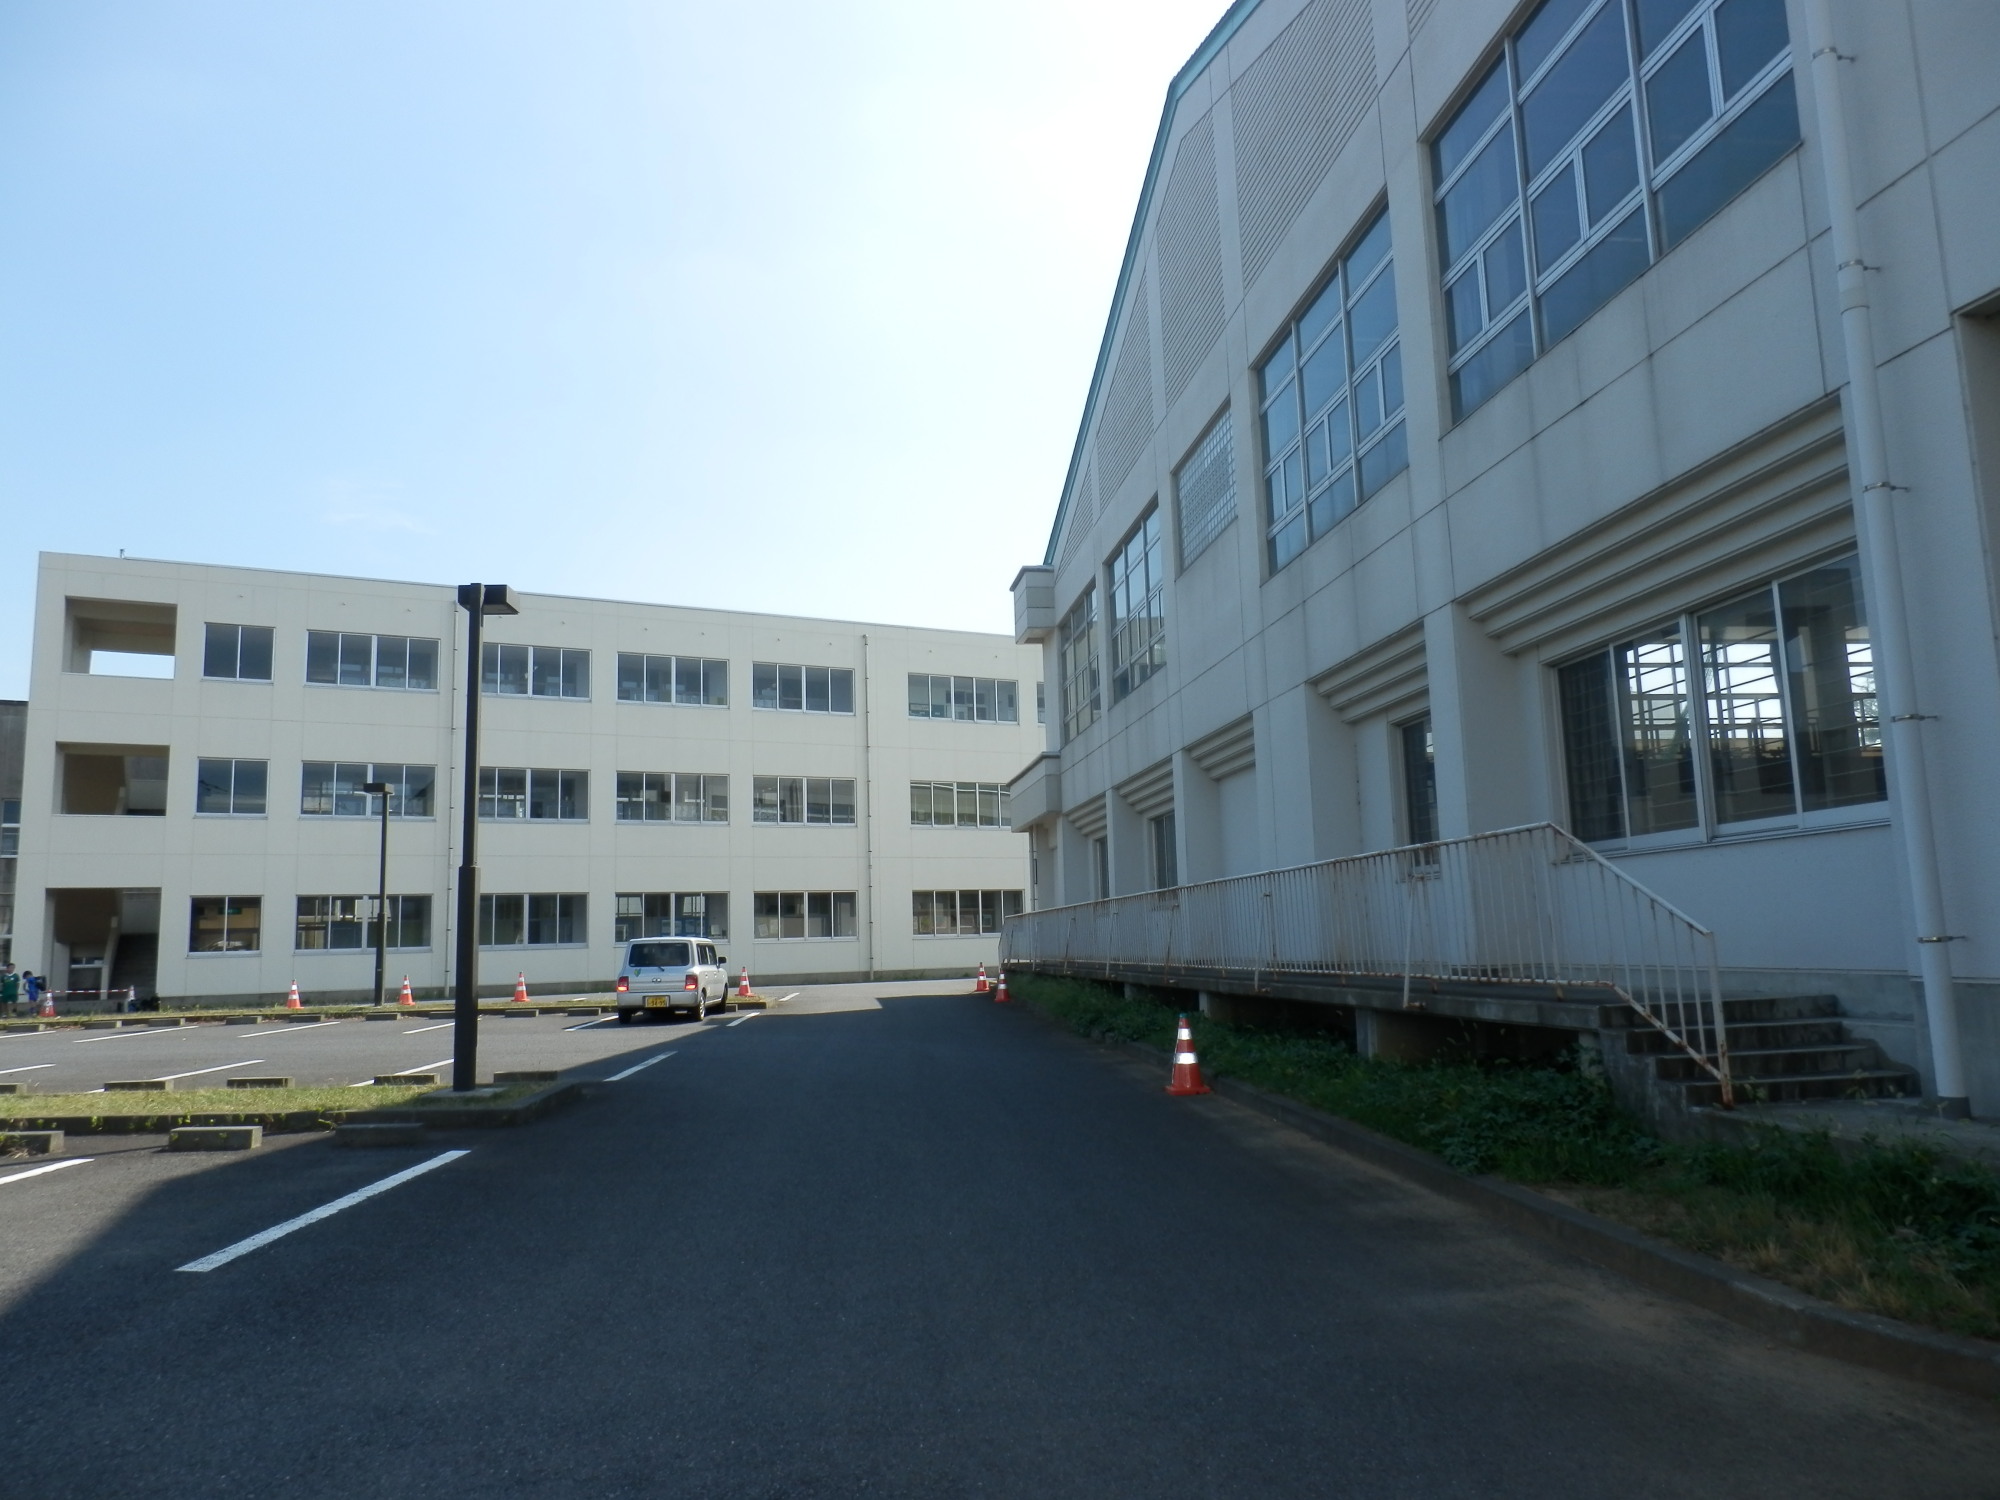 Primary school. Yahara up to elementary school (elementary school) 3227m